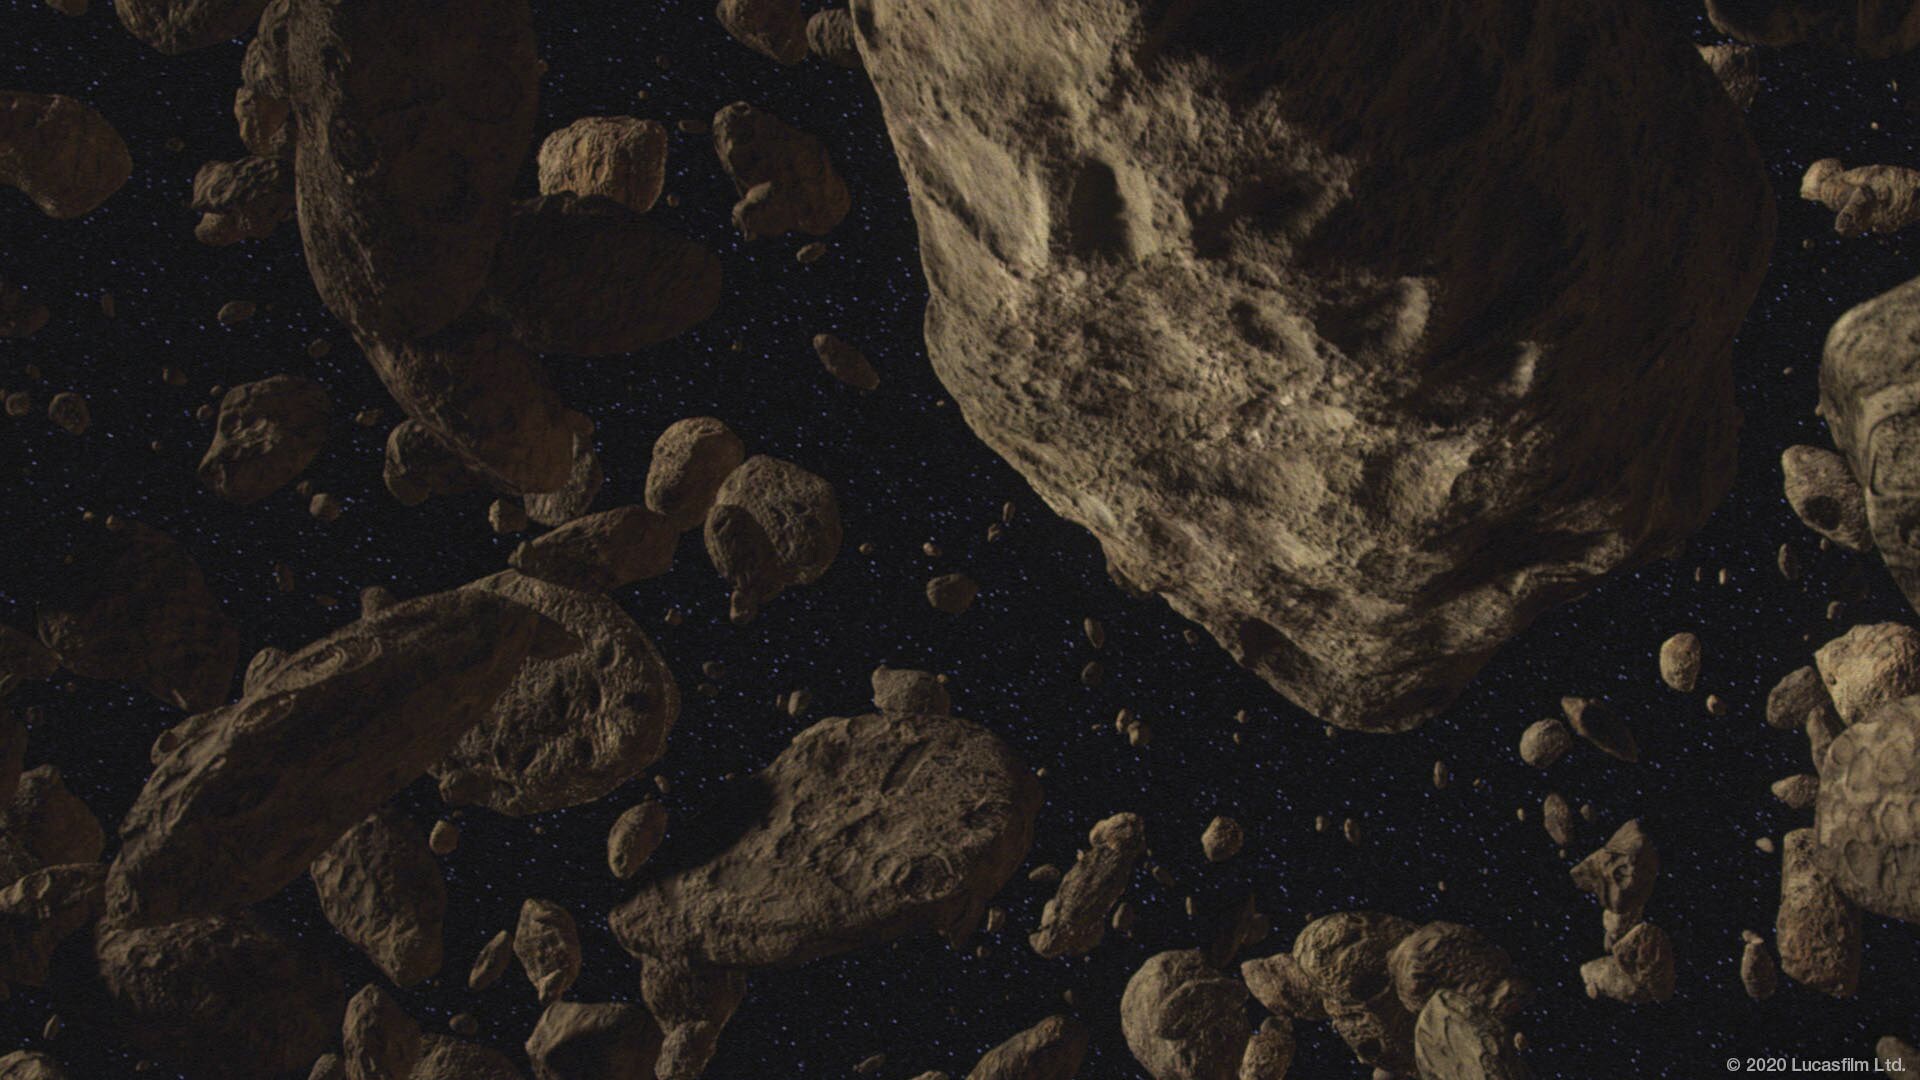 Star Wars virtual background: Astroid field